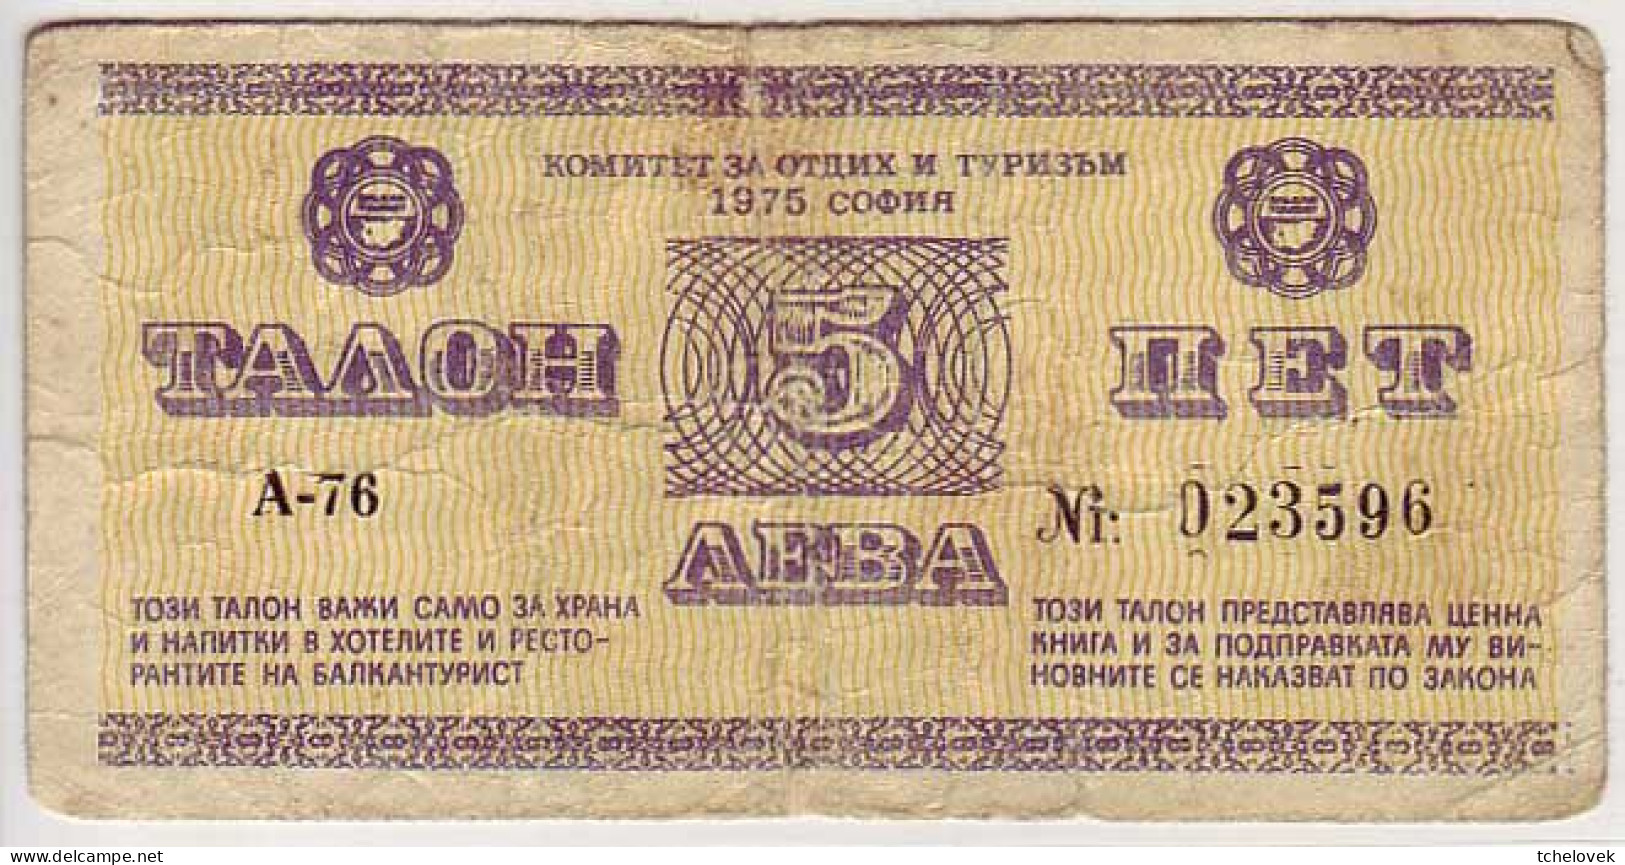 (Billets). Bulgarie Bulgaria. Foreing Exchange Certificate. Rare. Balkan Tourist. 1975. 5 Leva Serie A-76 N° 023596 - Bulgaria